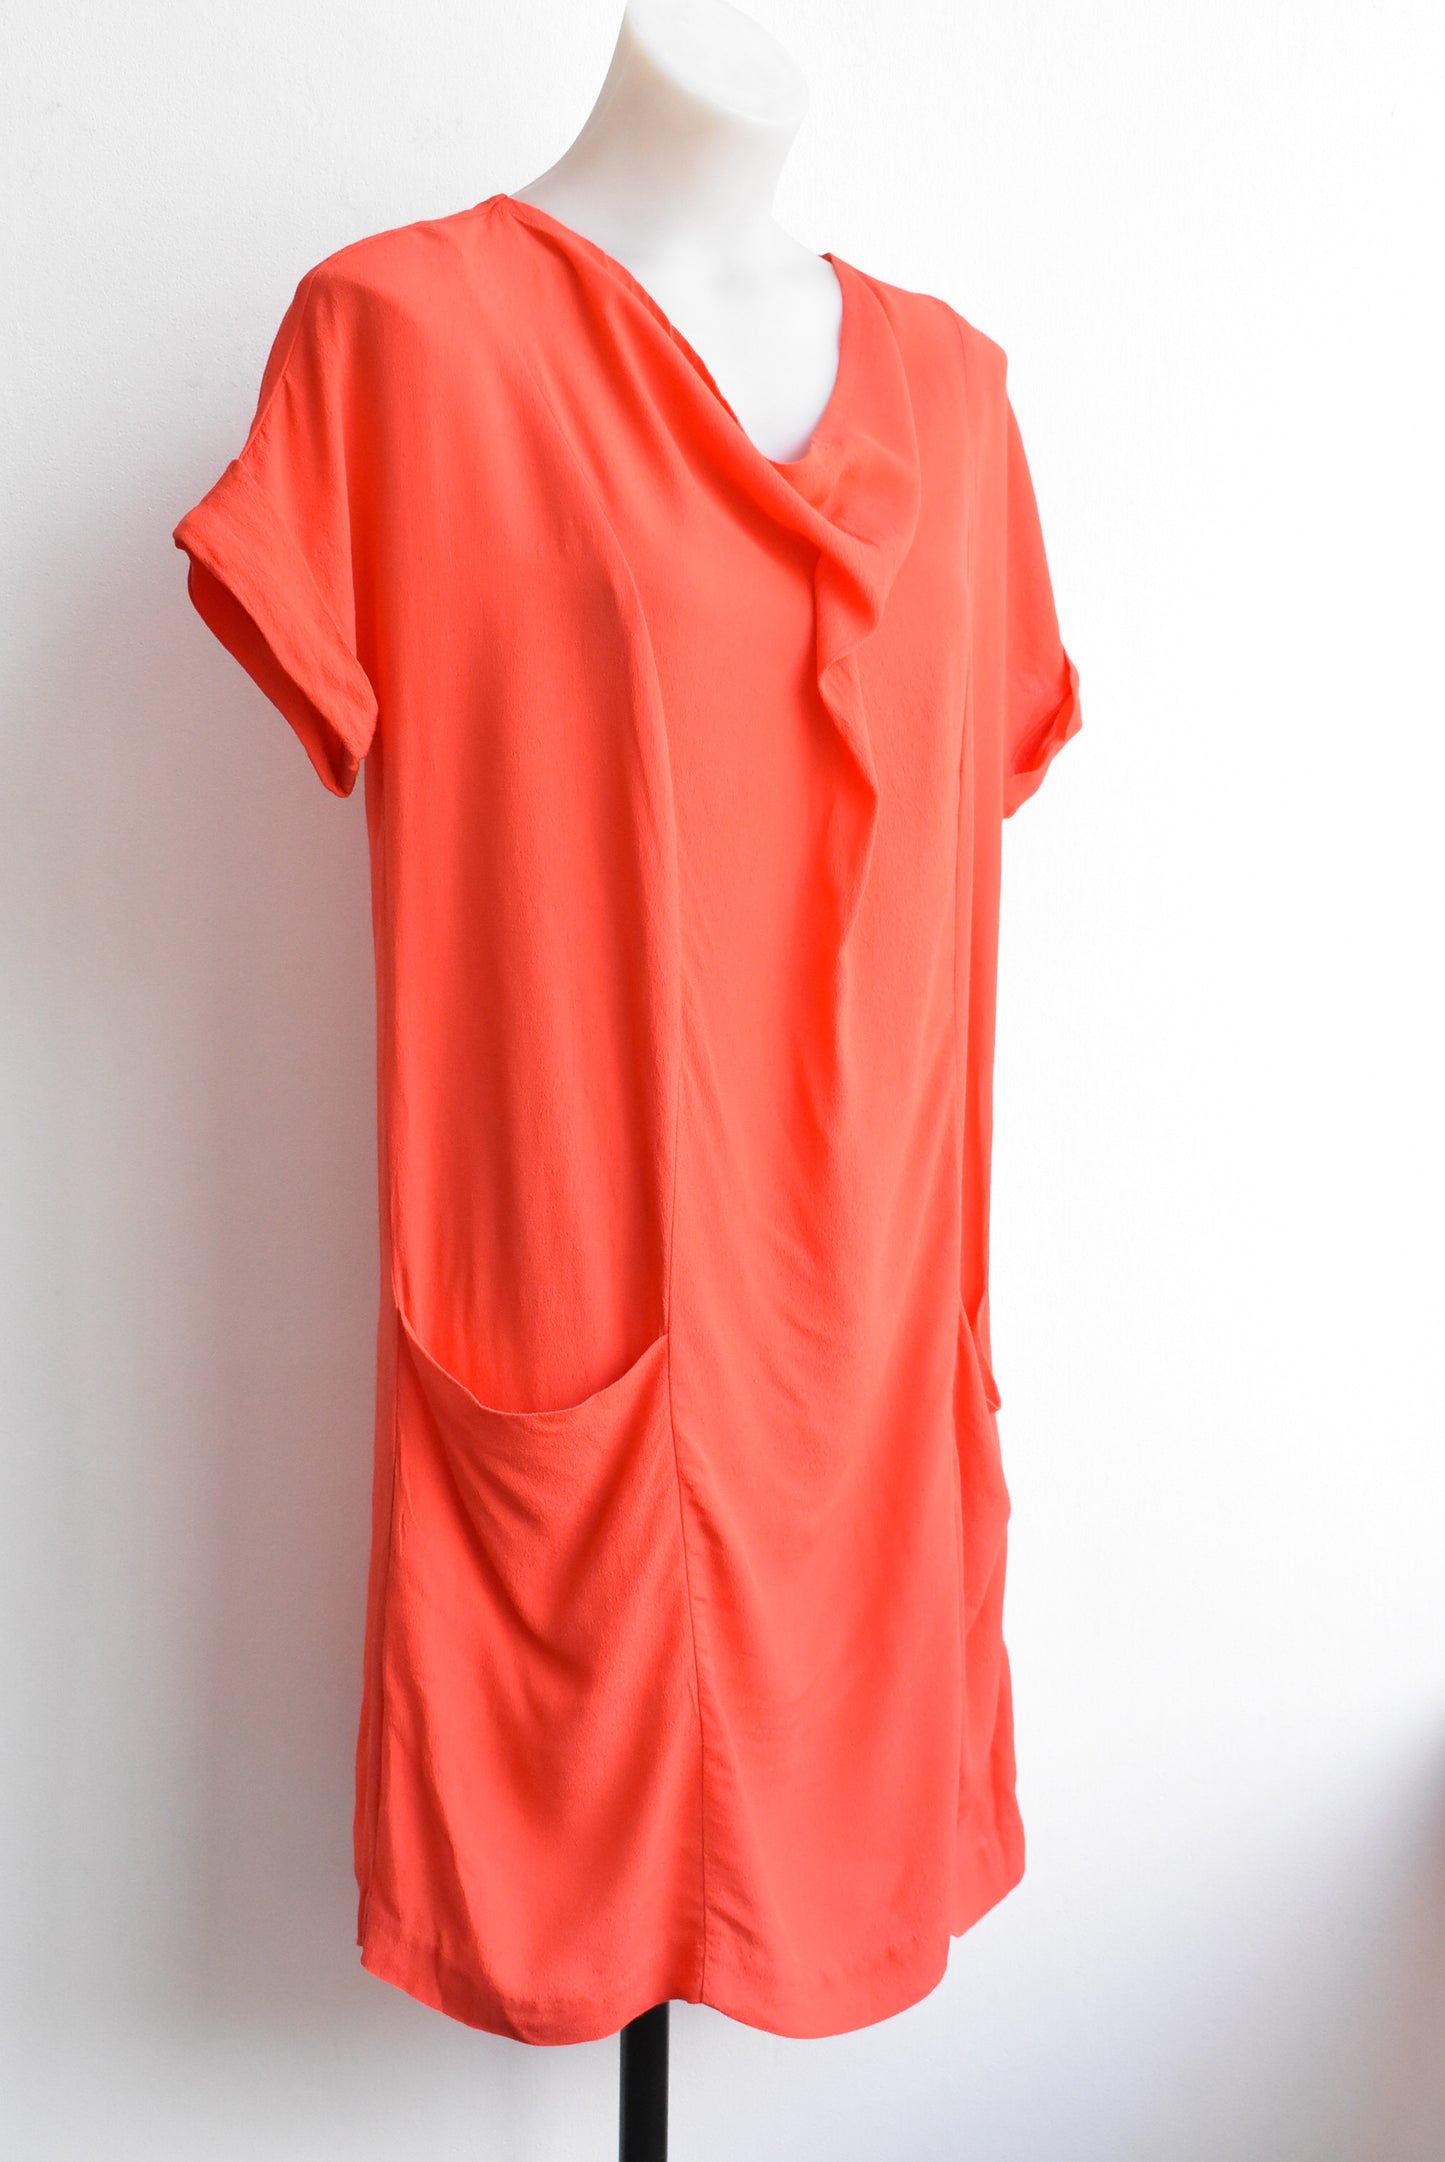 Mardee short orange dress, size 14